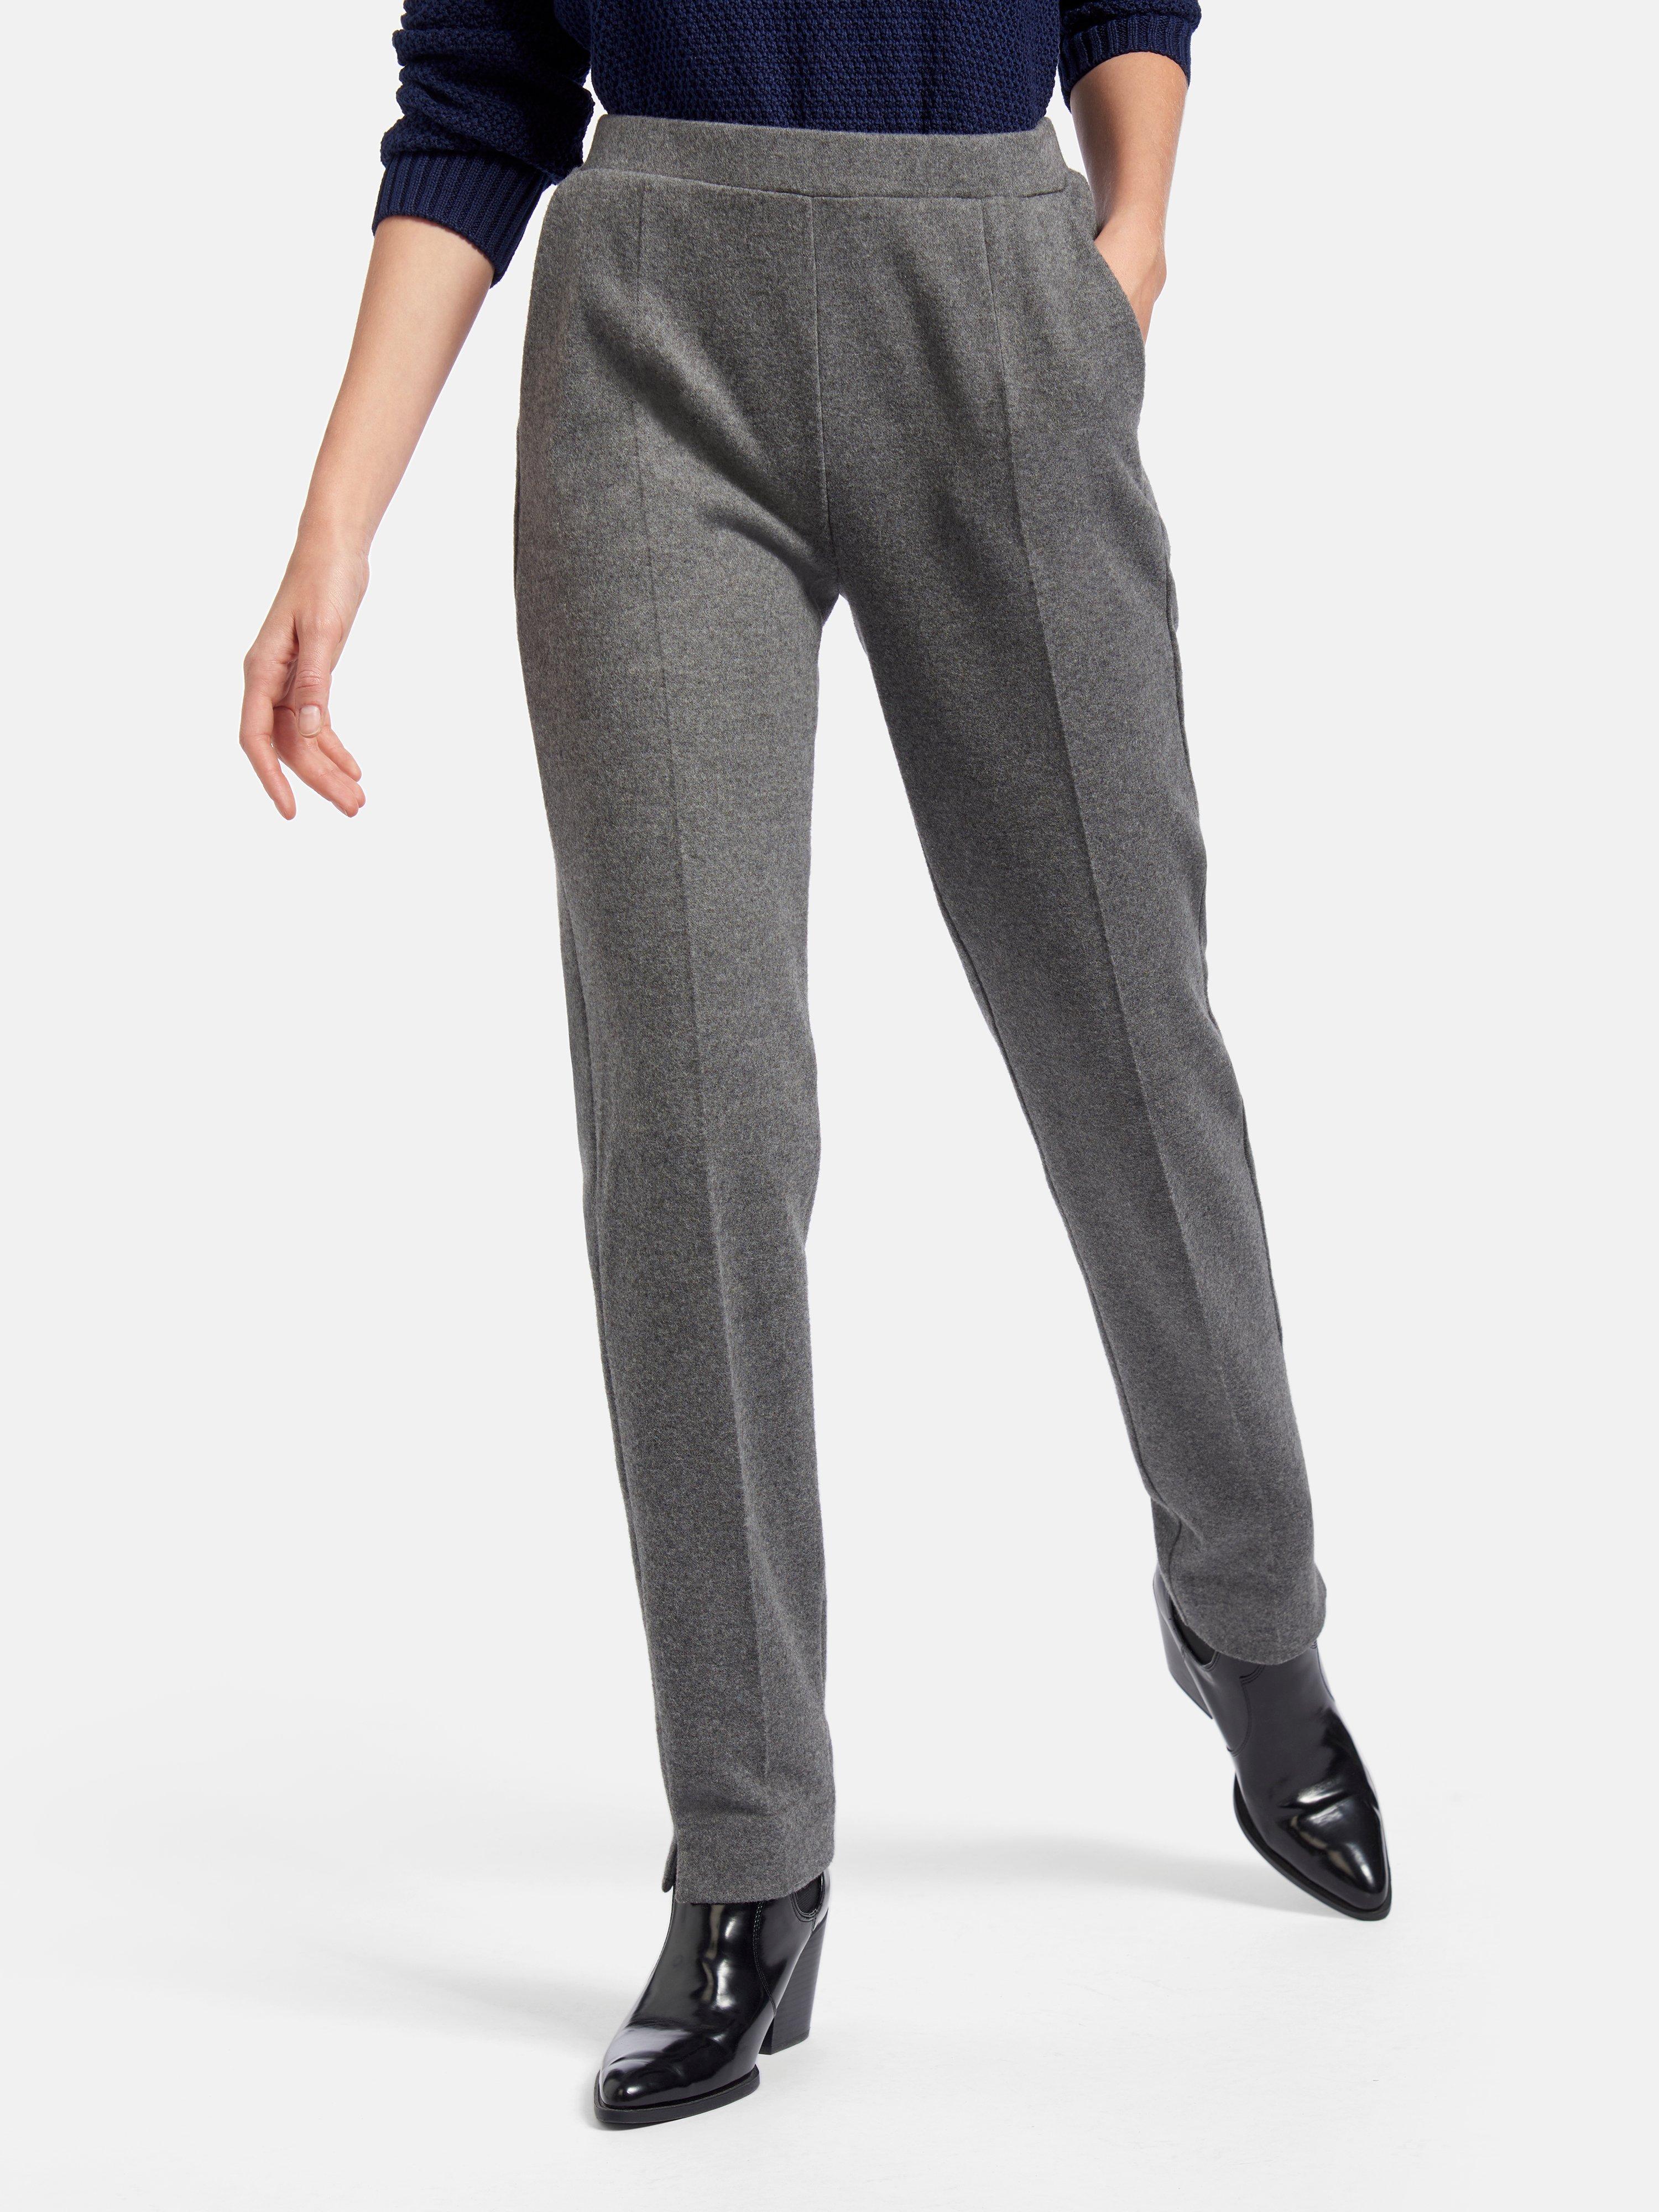 Raphaela by Brax - Jersey pull-on trousers design Lis - grey-mélange